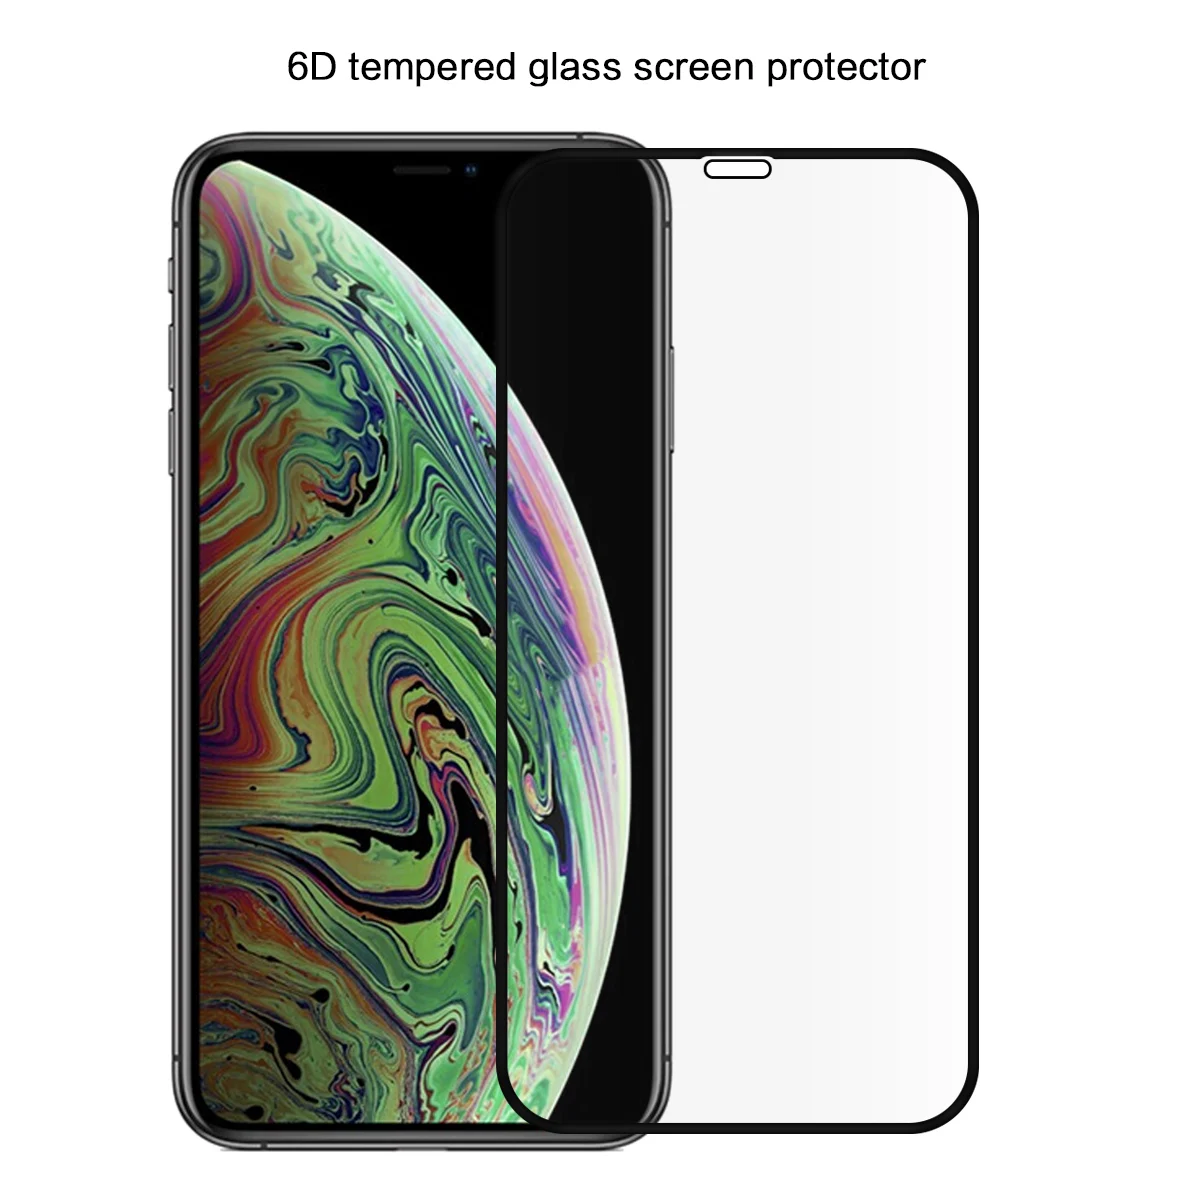 2 упаковки из закаленного стекла для iPhone Xs Max/Xr 6D Защитная пленка для экрана телефона с защитой от царапин для iPhone Xs Max/Xr Phone